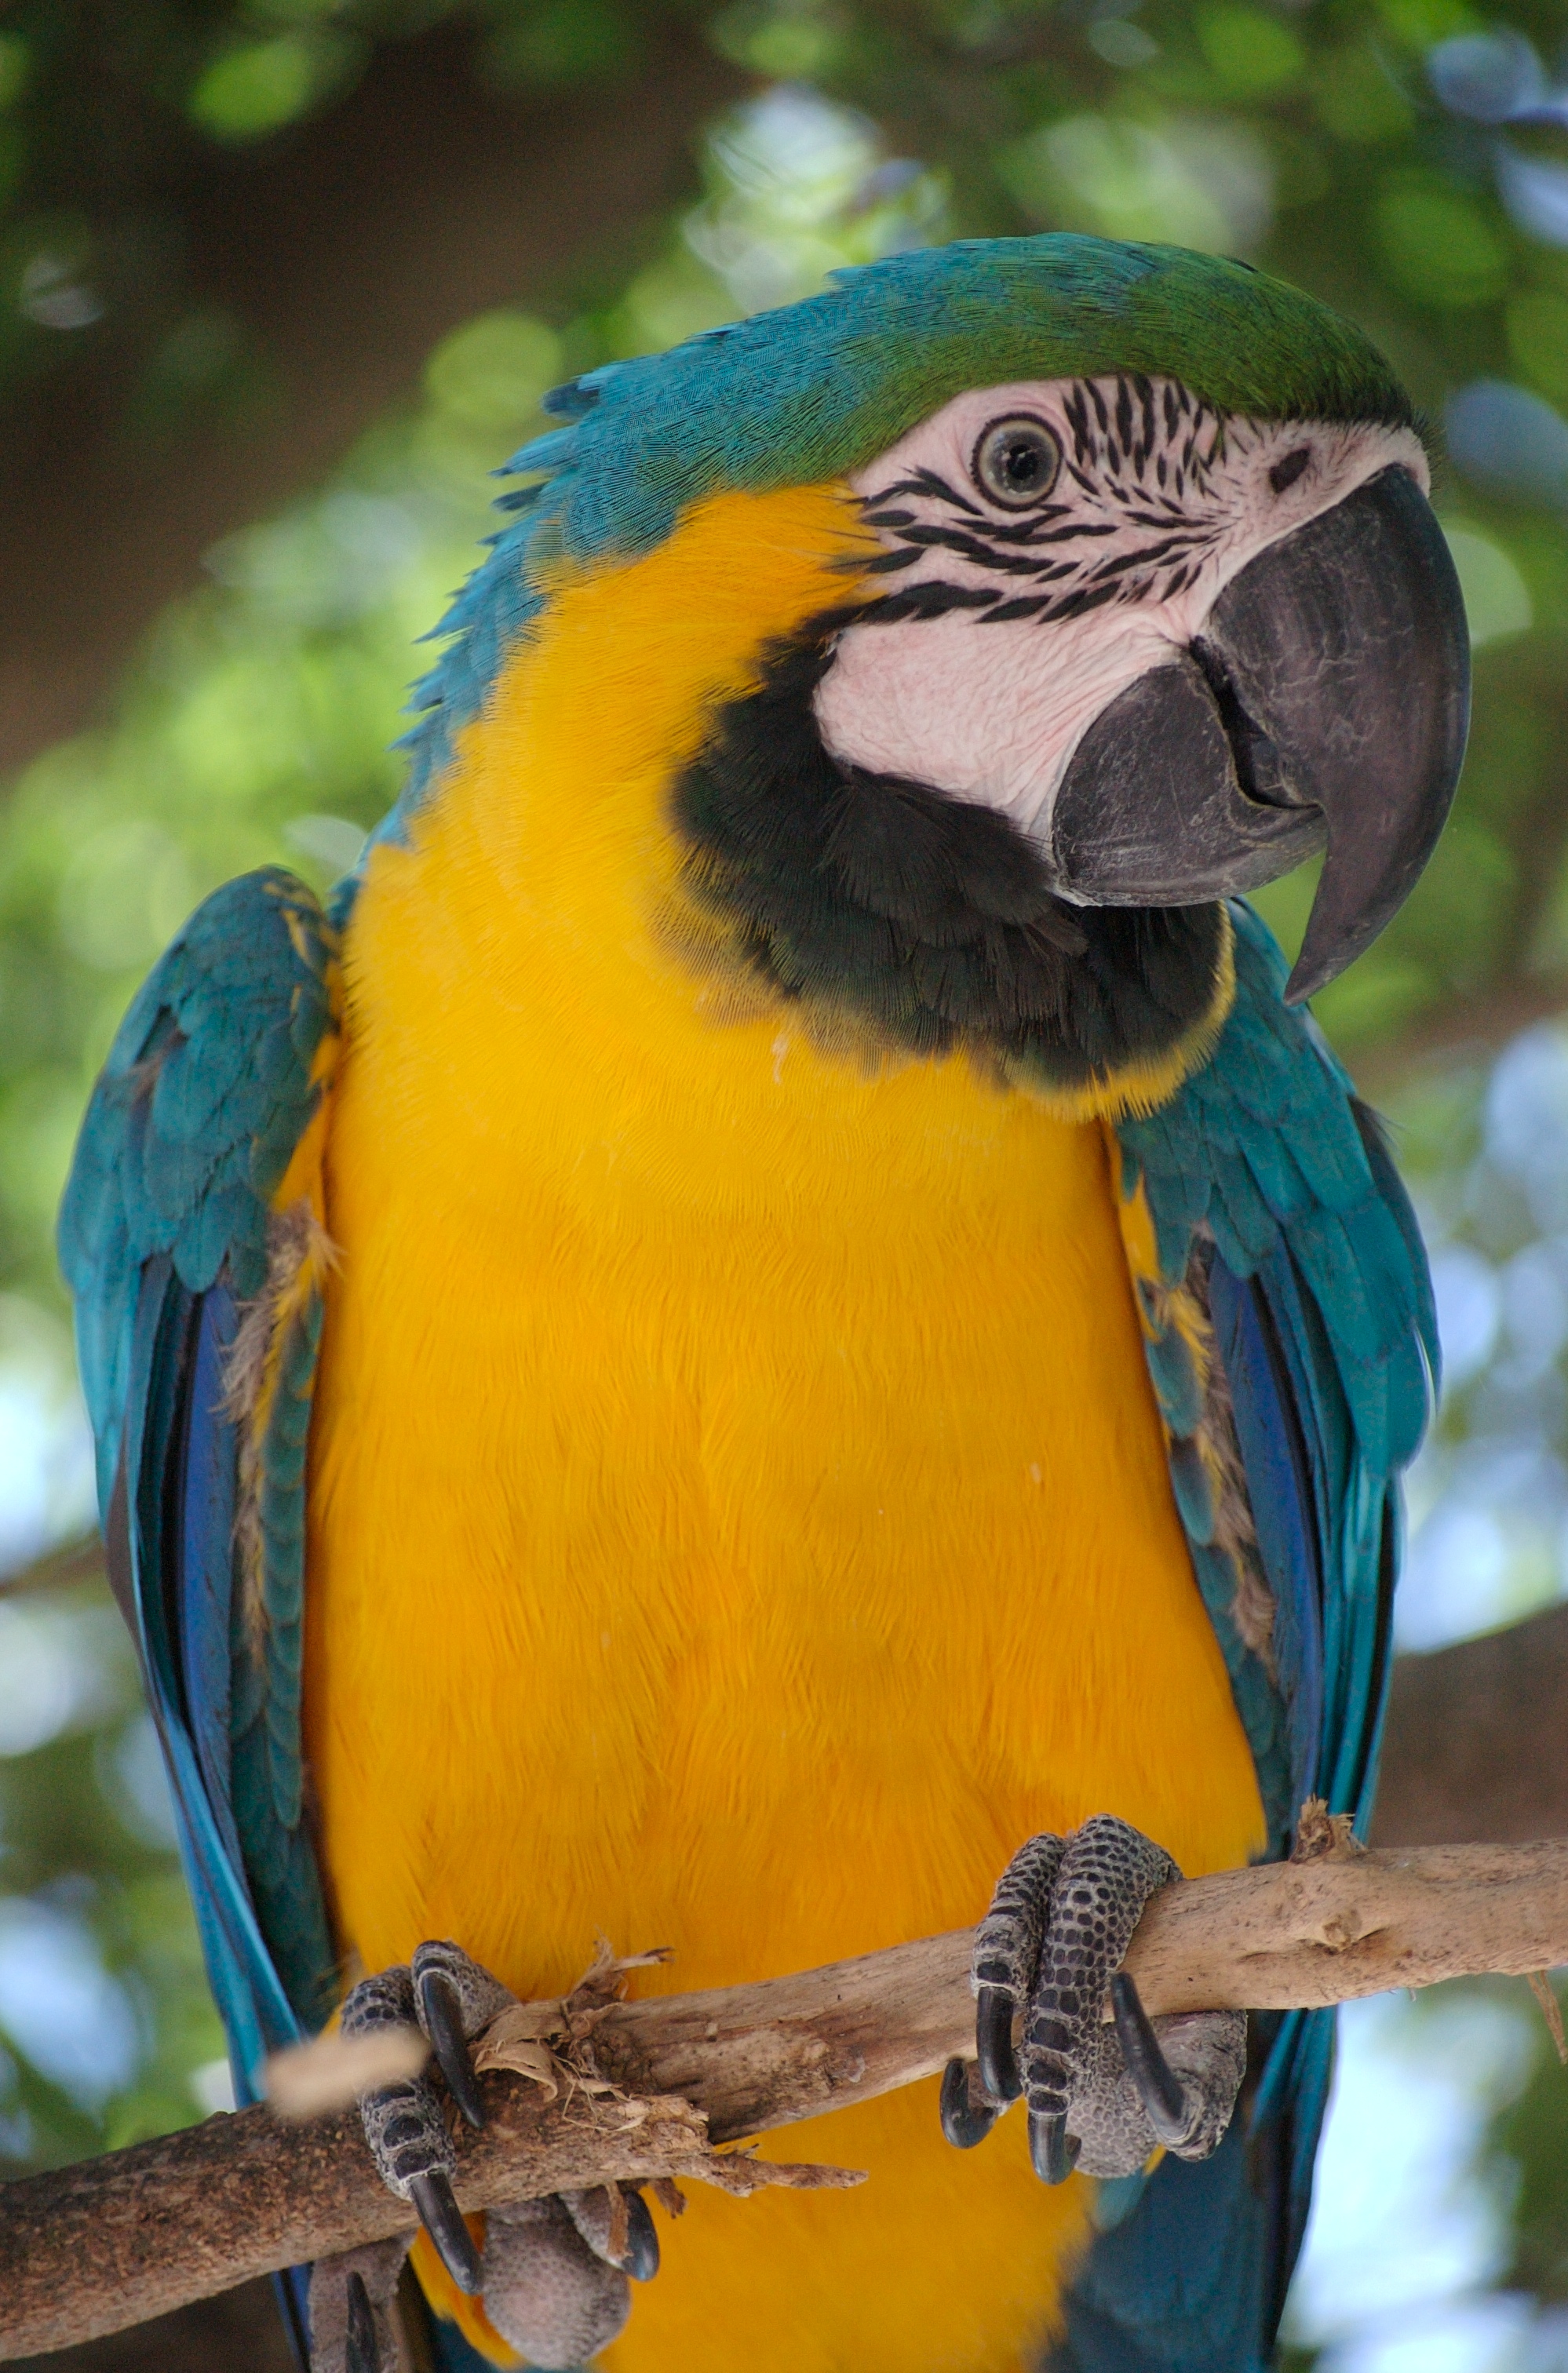 FileAra ararauna Blueandyellow Macaw in a tree.jpg Wikimedia Commons